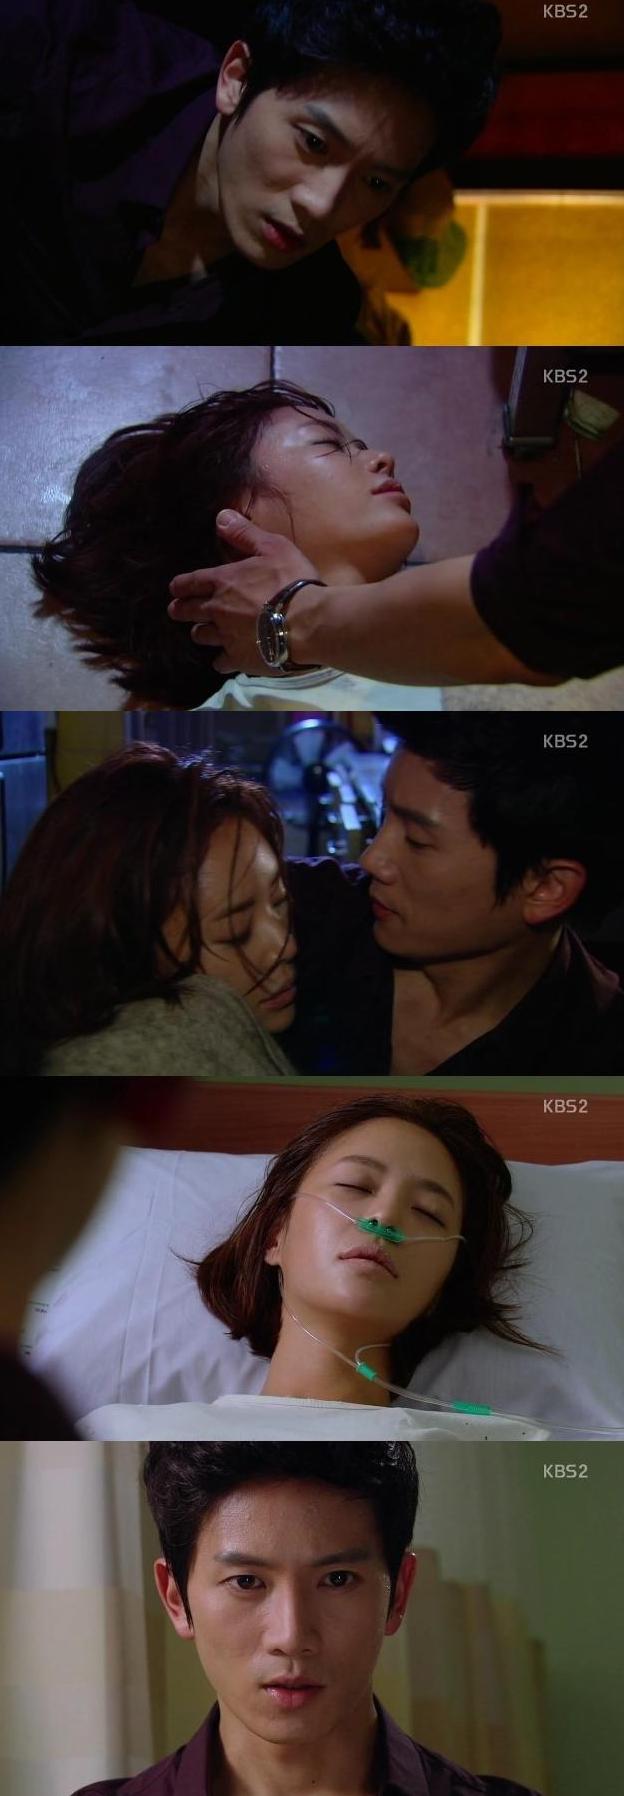 episode 6 captures for the Korean drama 'Secrets'